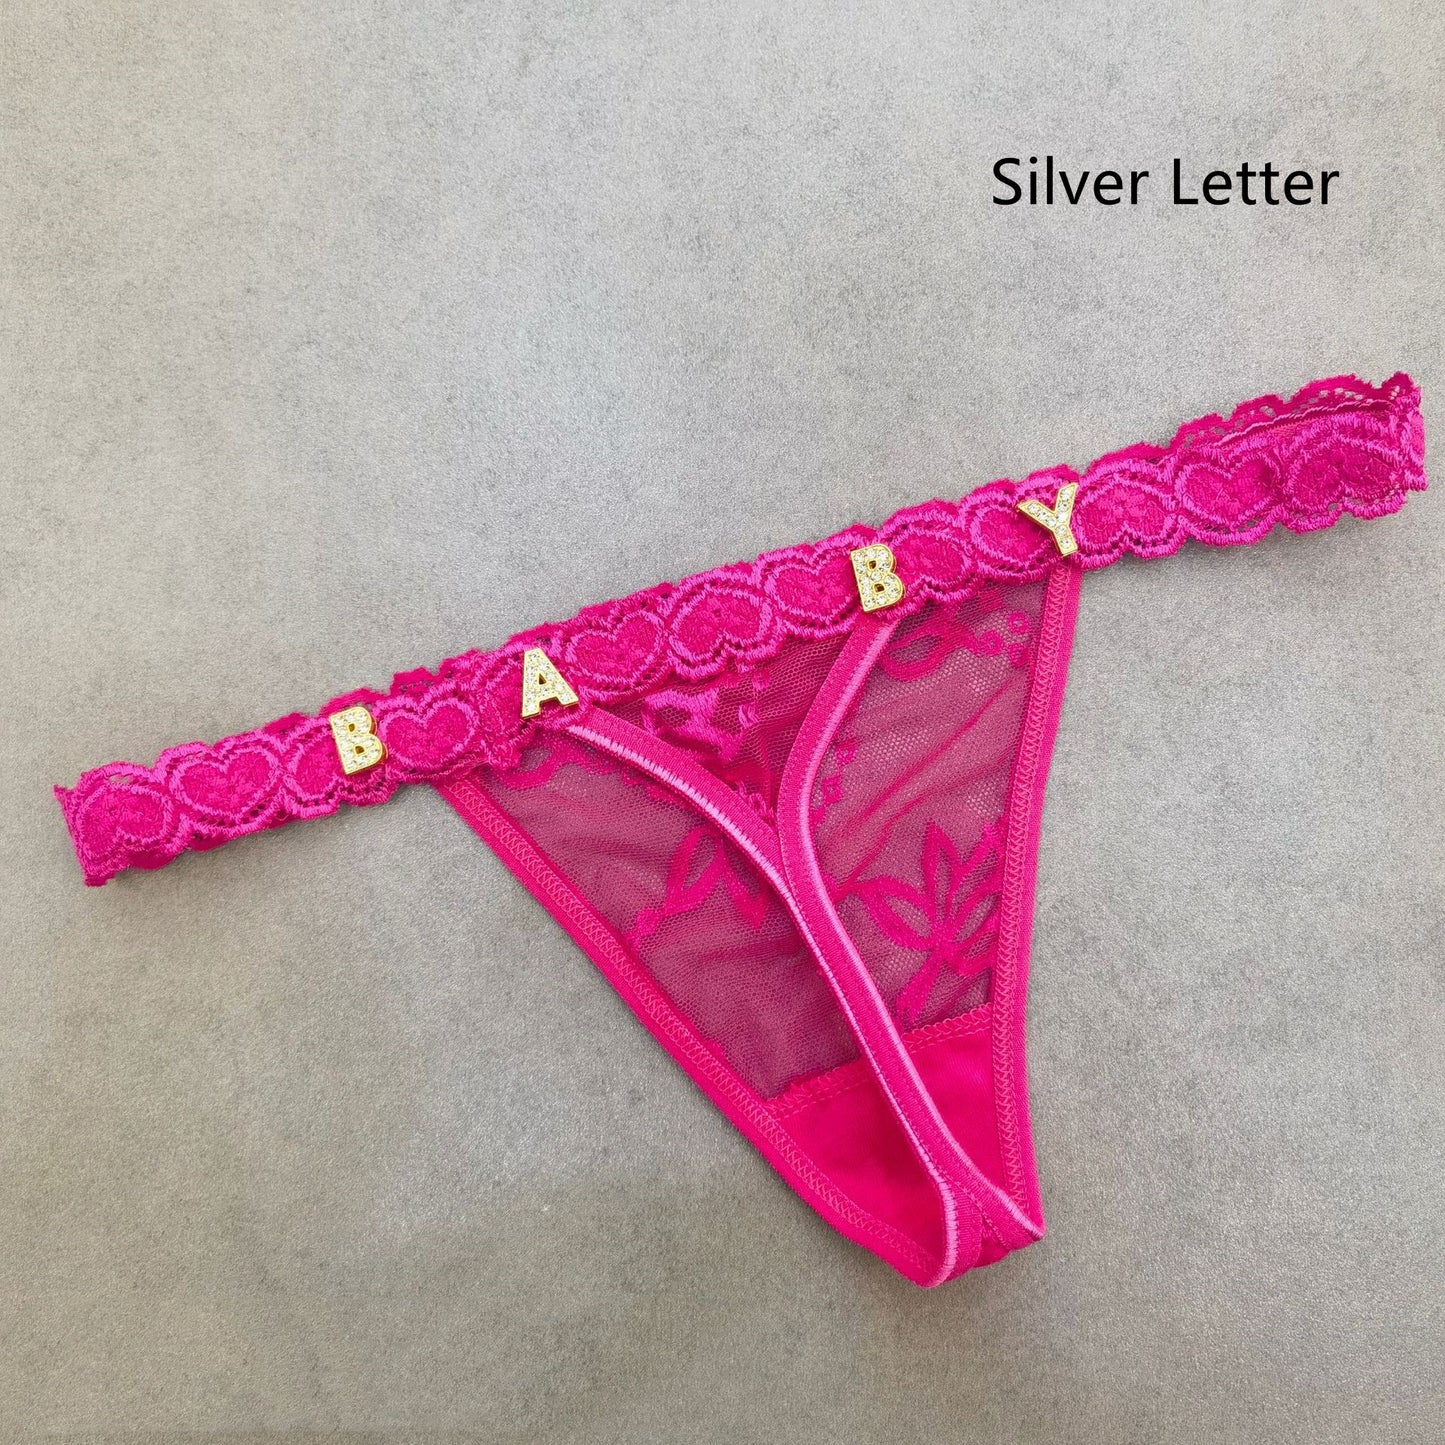 Women's Lace Transparent Rhinestone Letter Shorts